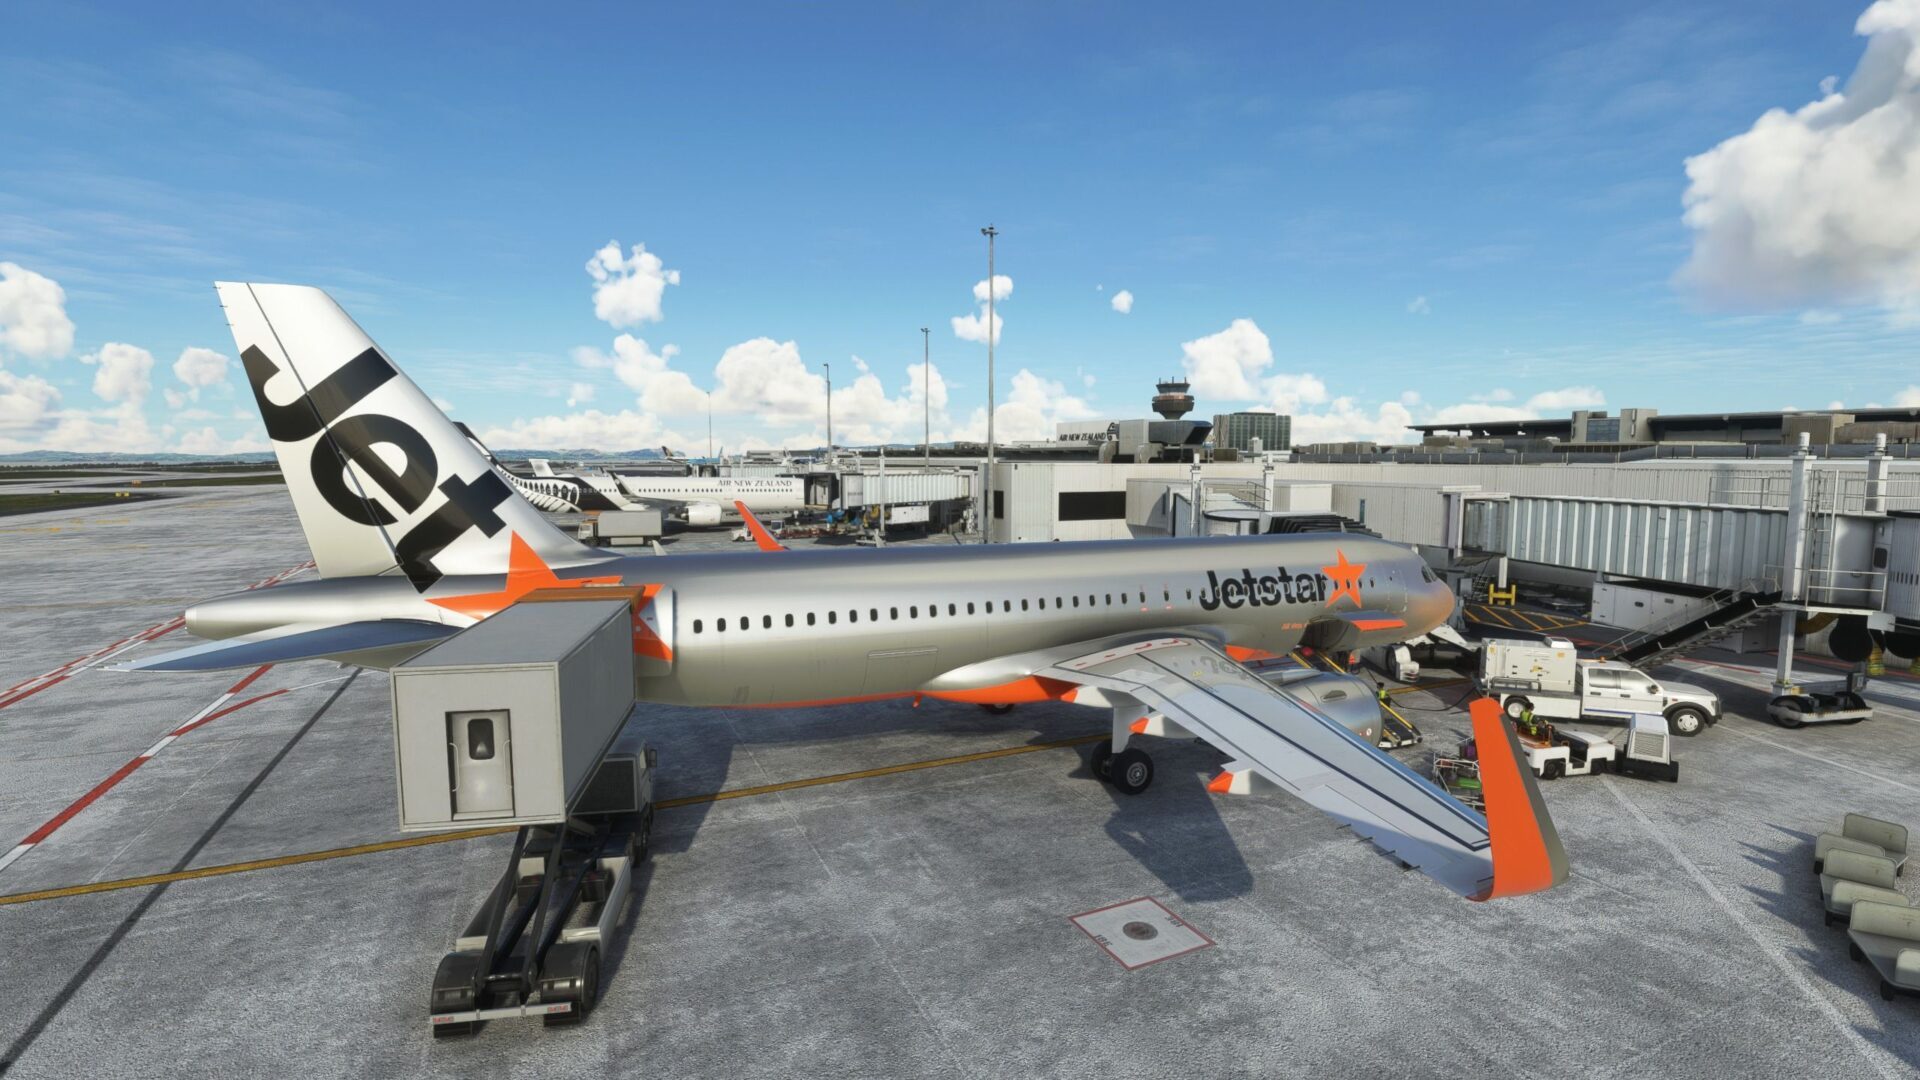 microsoft-flight-simulator-auckland-airport-review-16-1-7950932